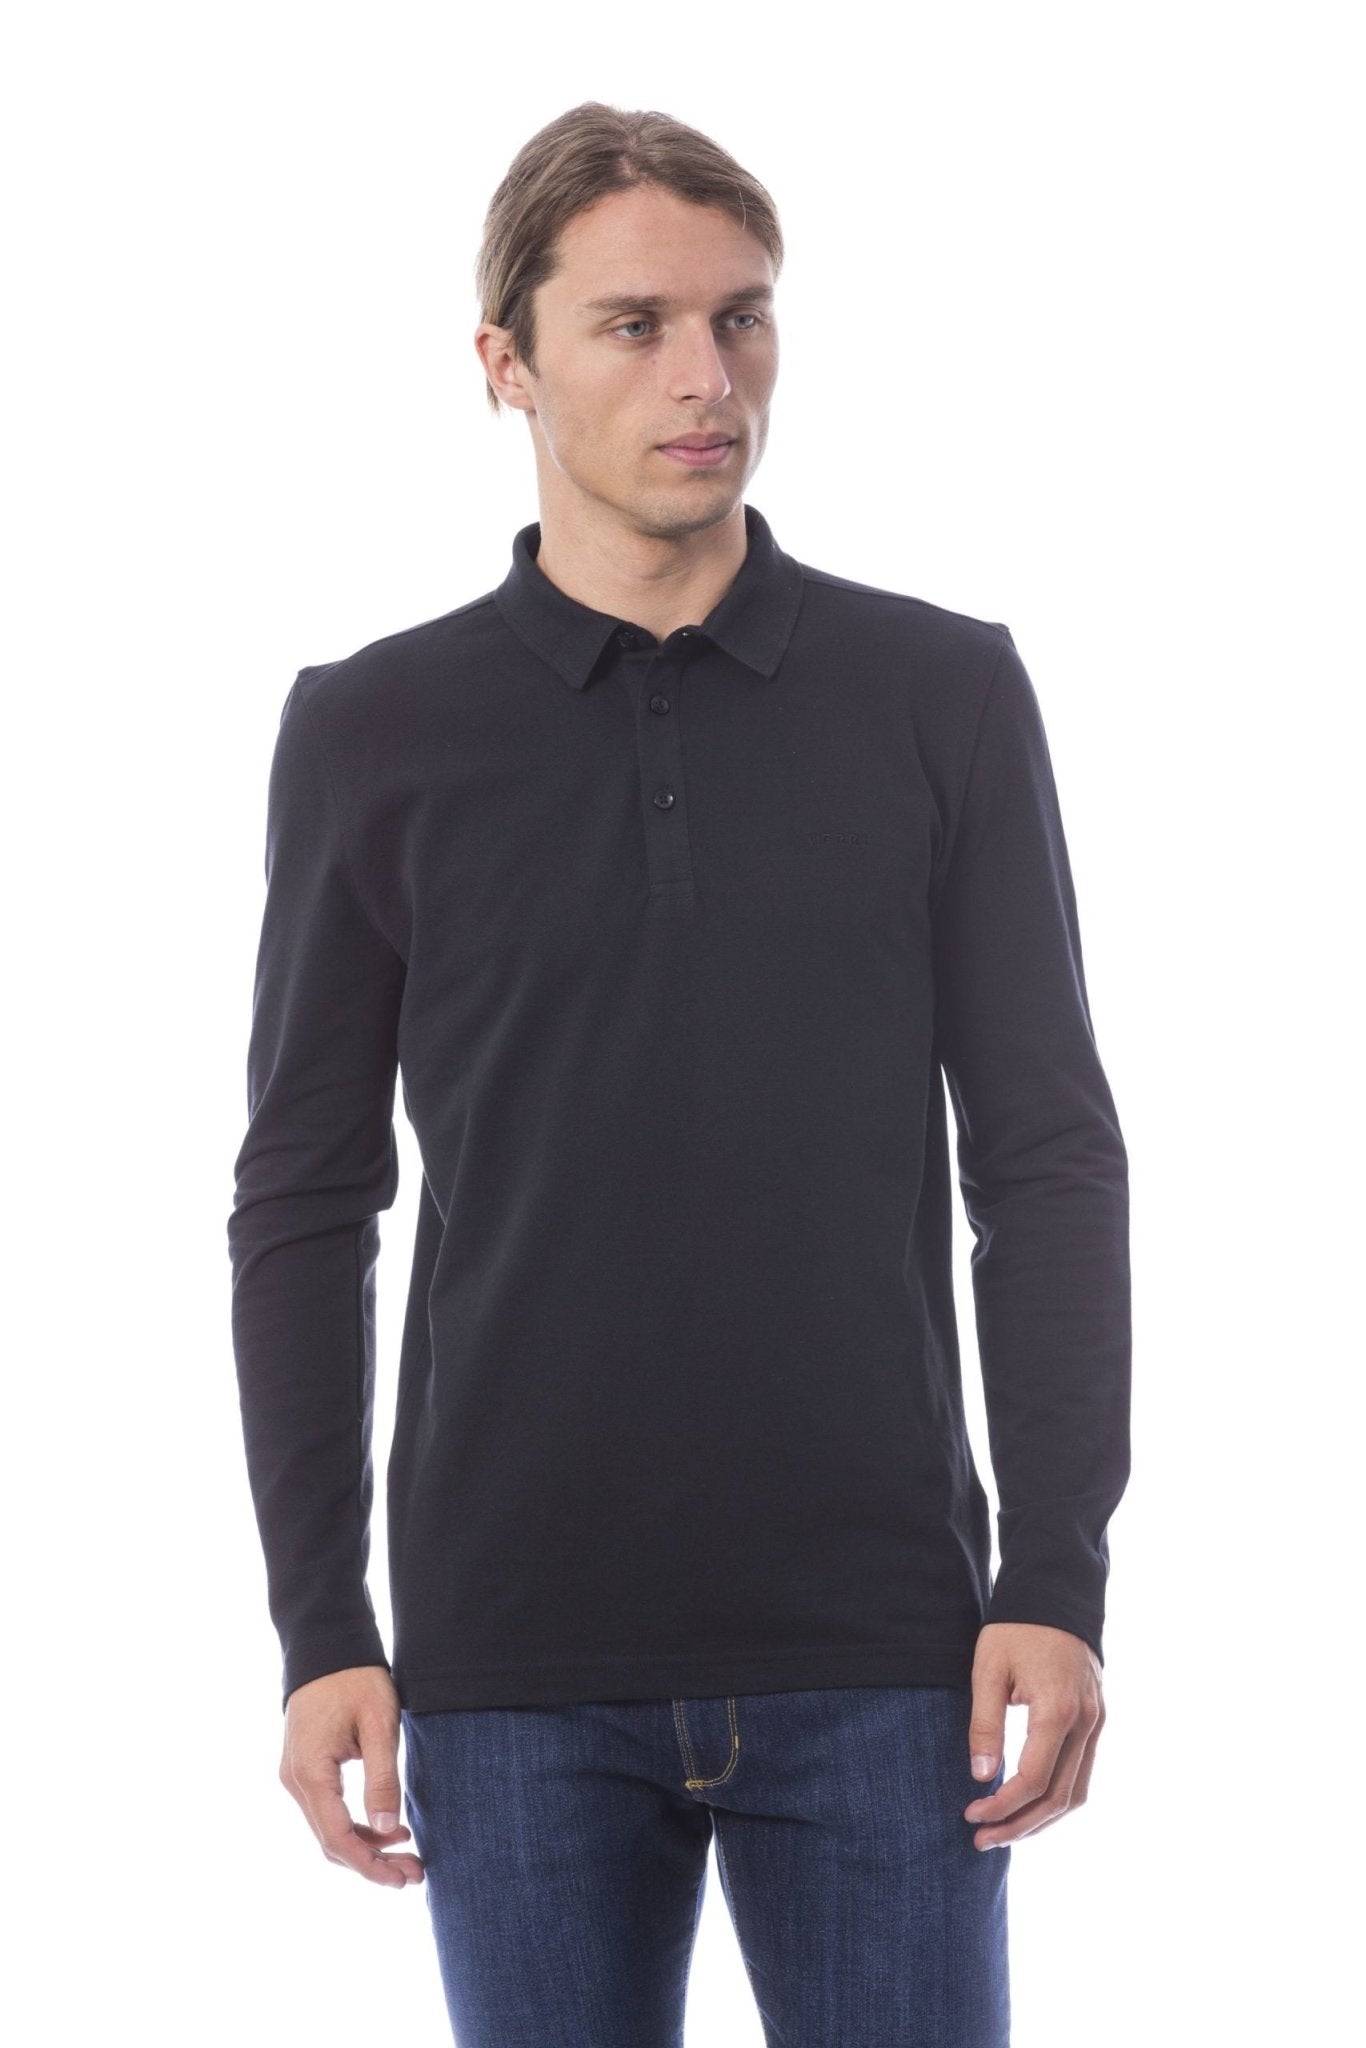 Verri Black Cotton T-Shirt - Fizigo